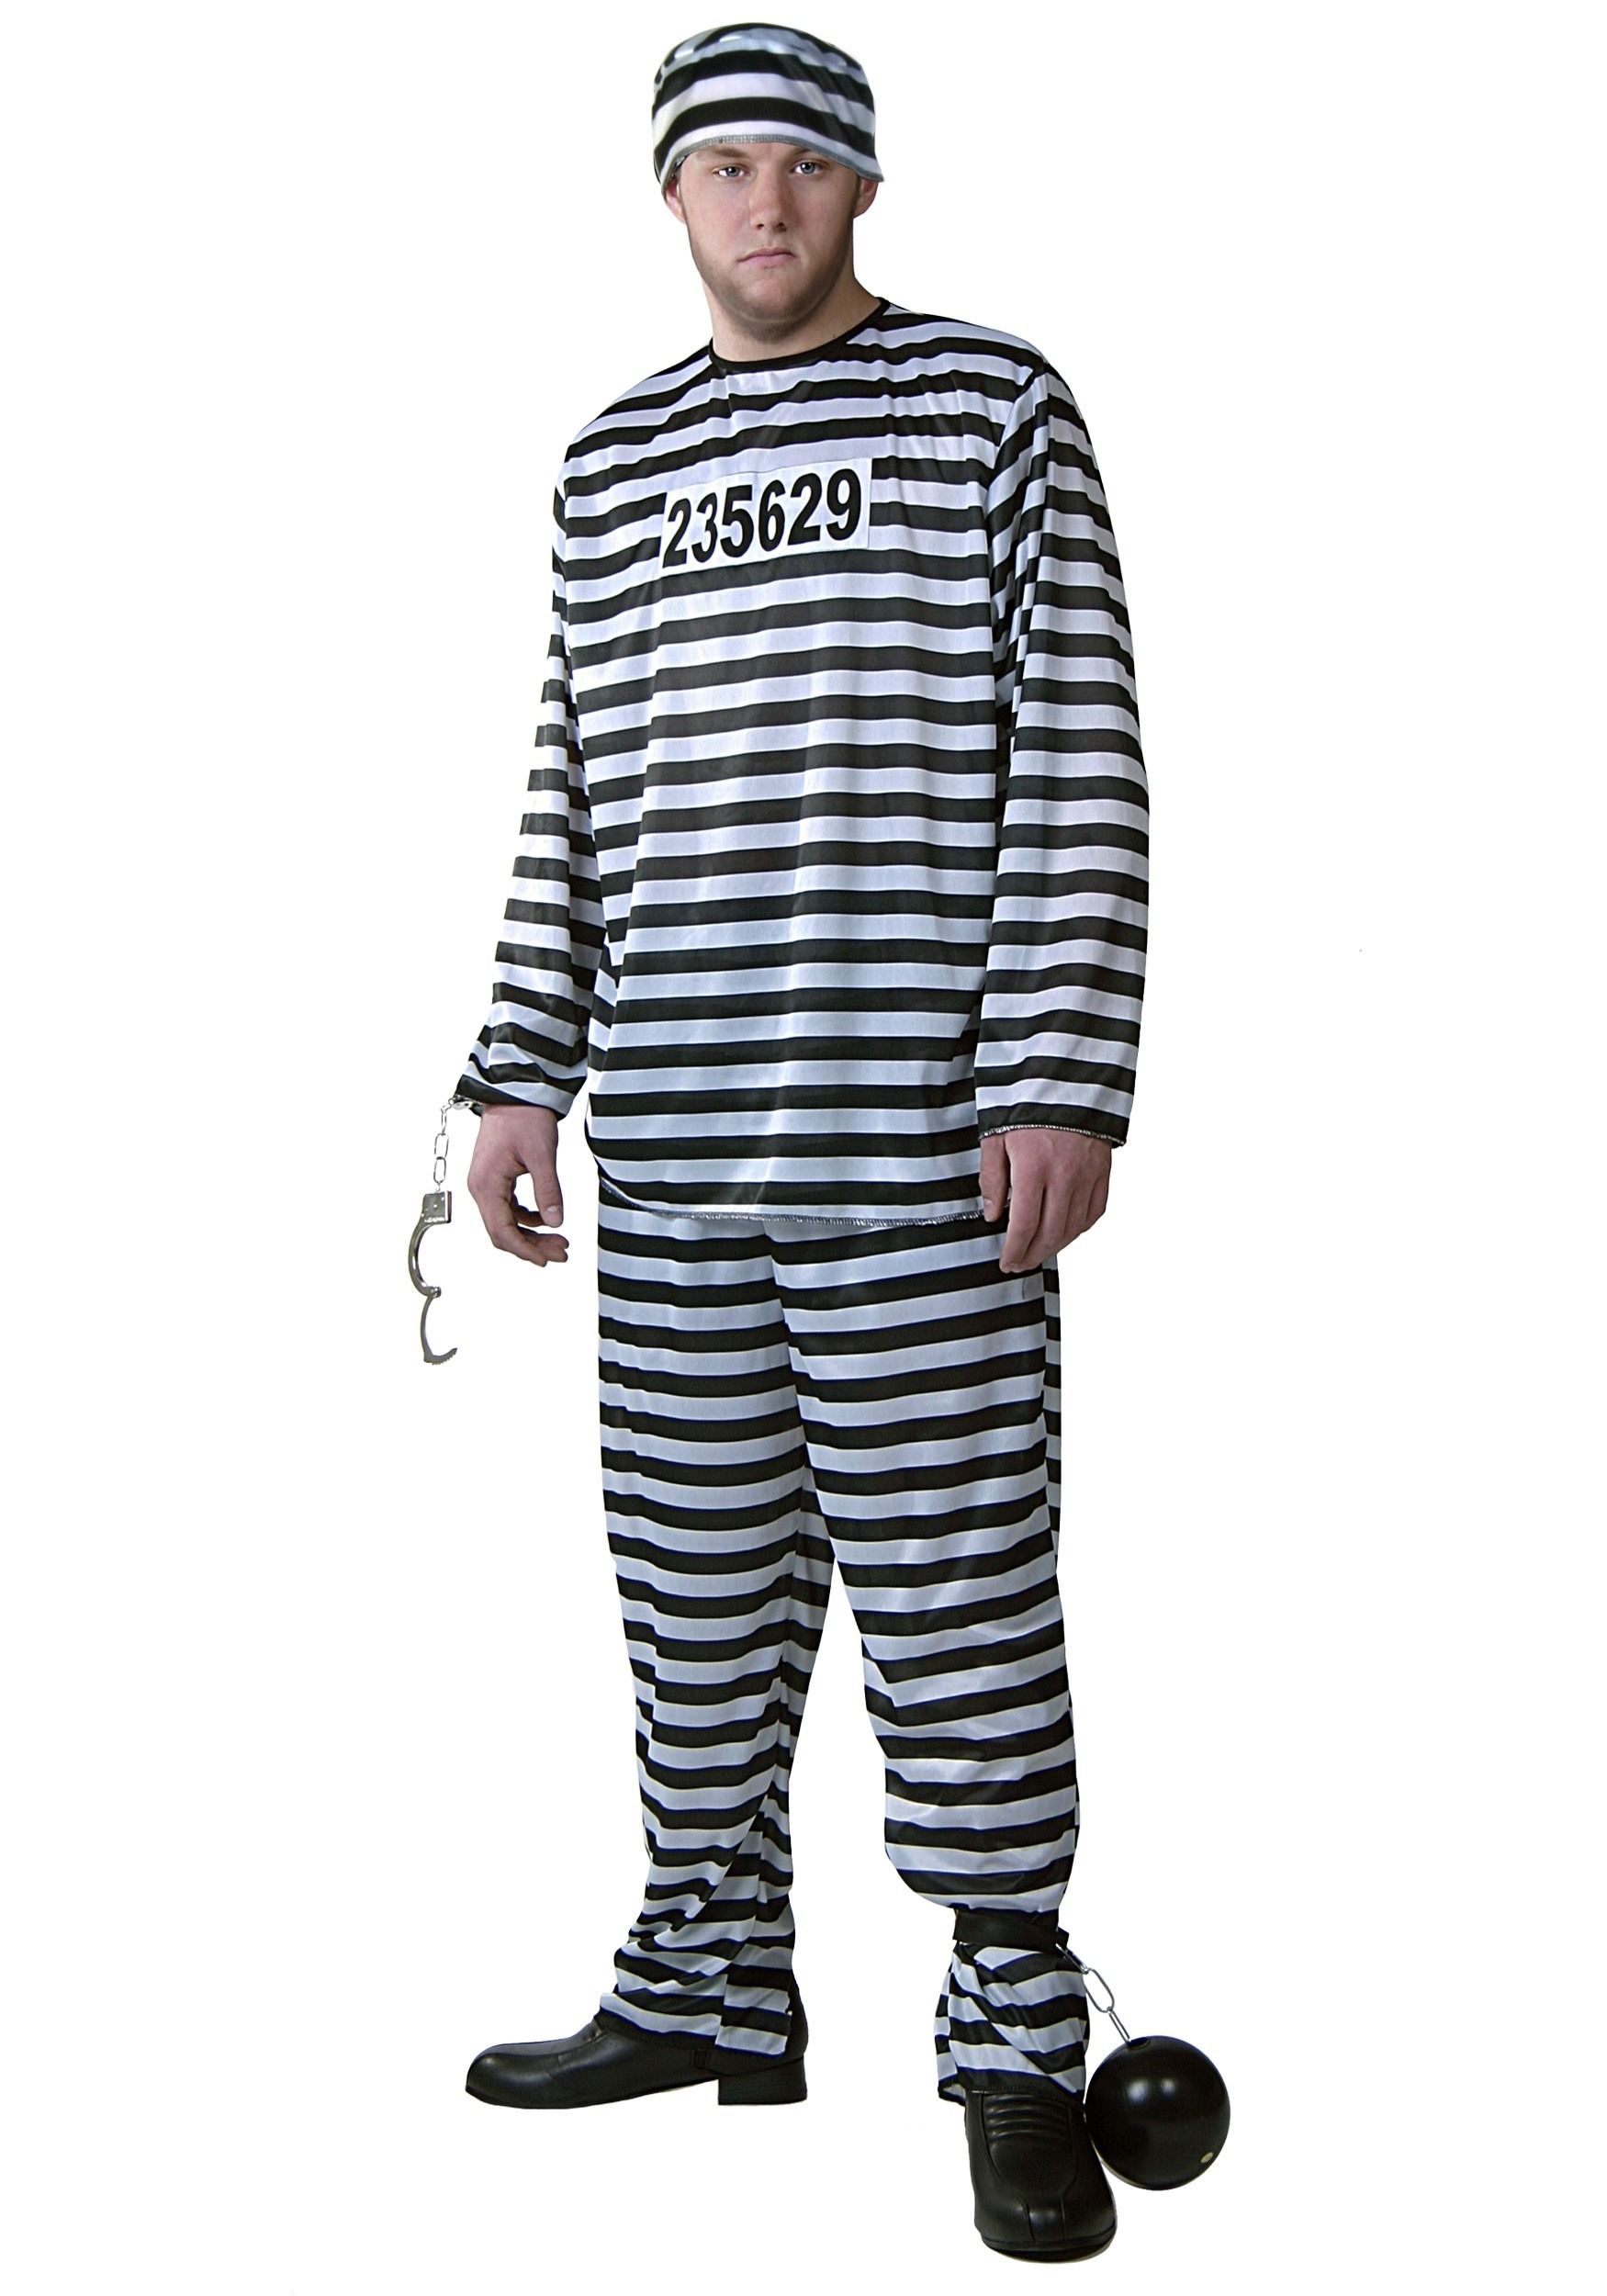 Plus Size Prisoner Costume for Men